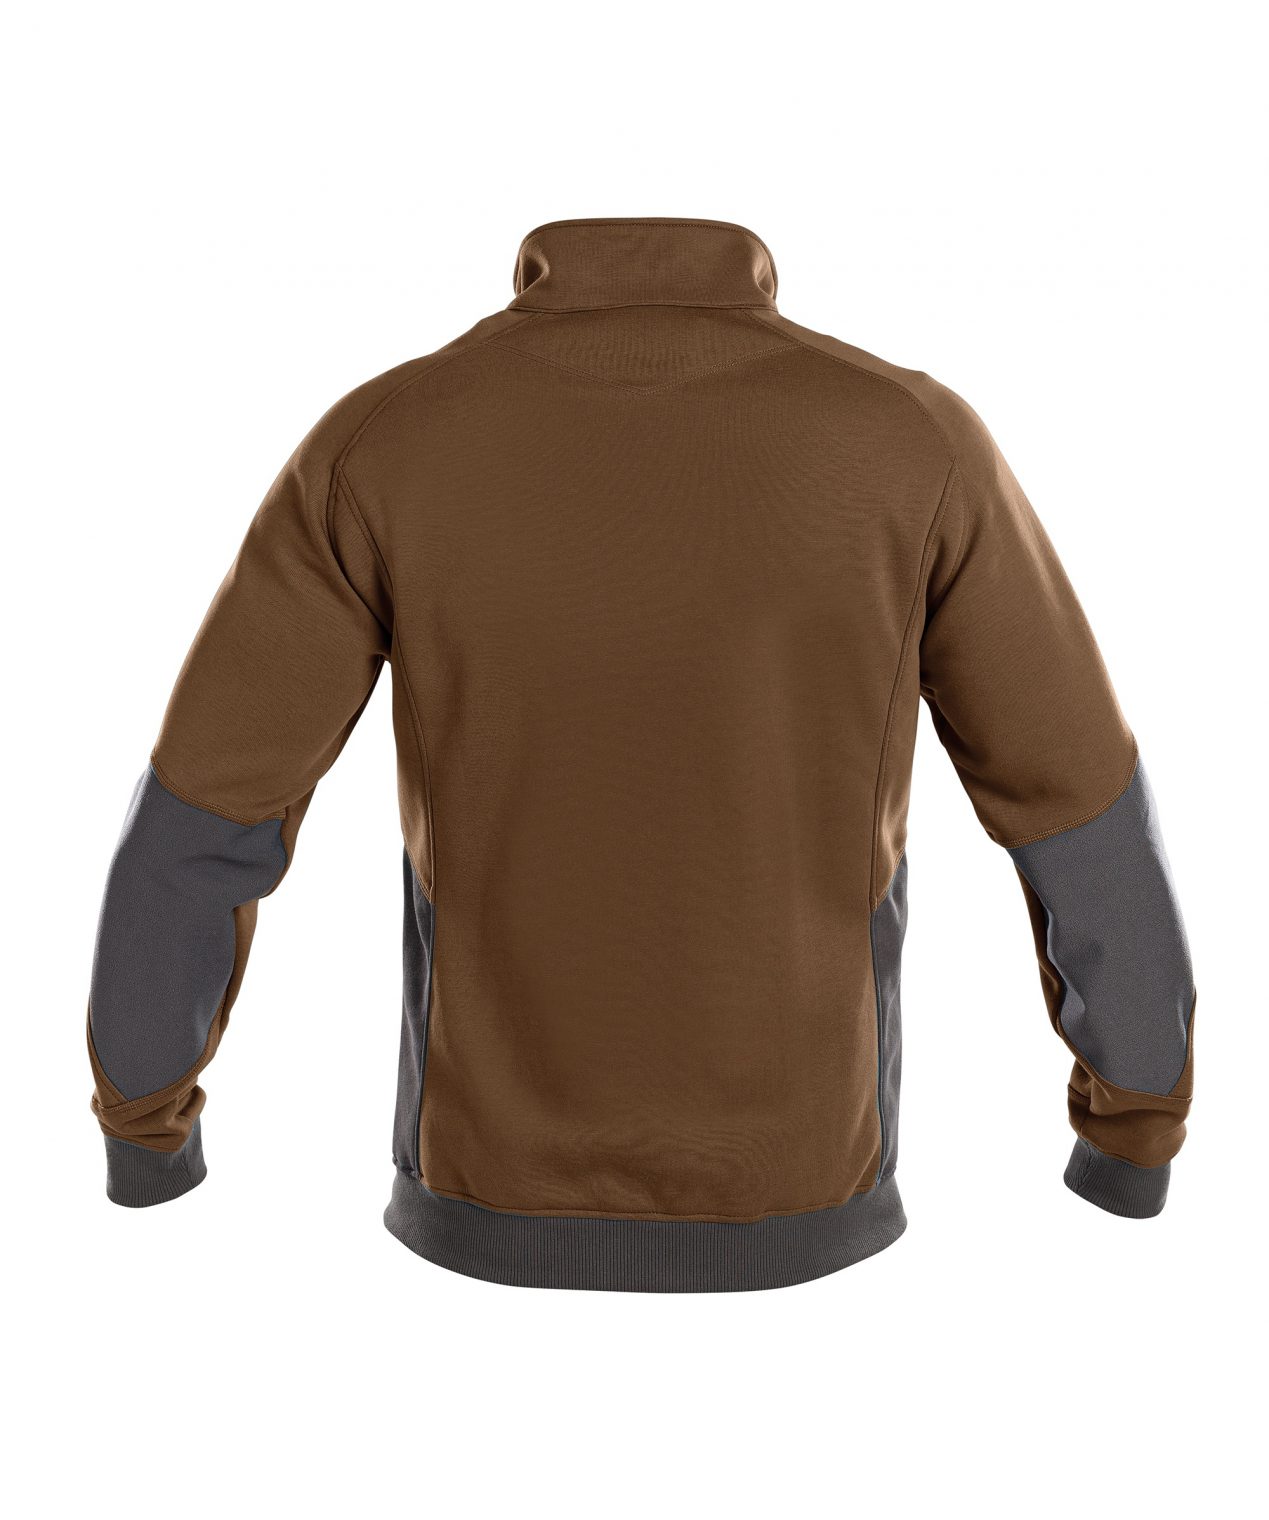 velox sweatshirt clay brown anthracite grey back